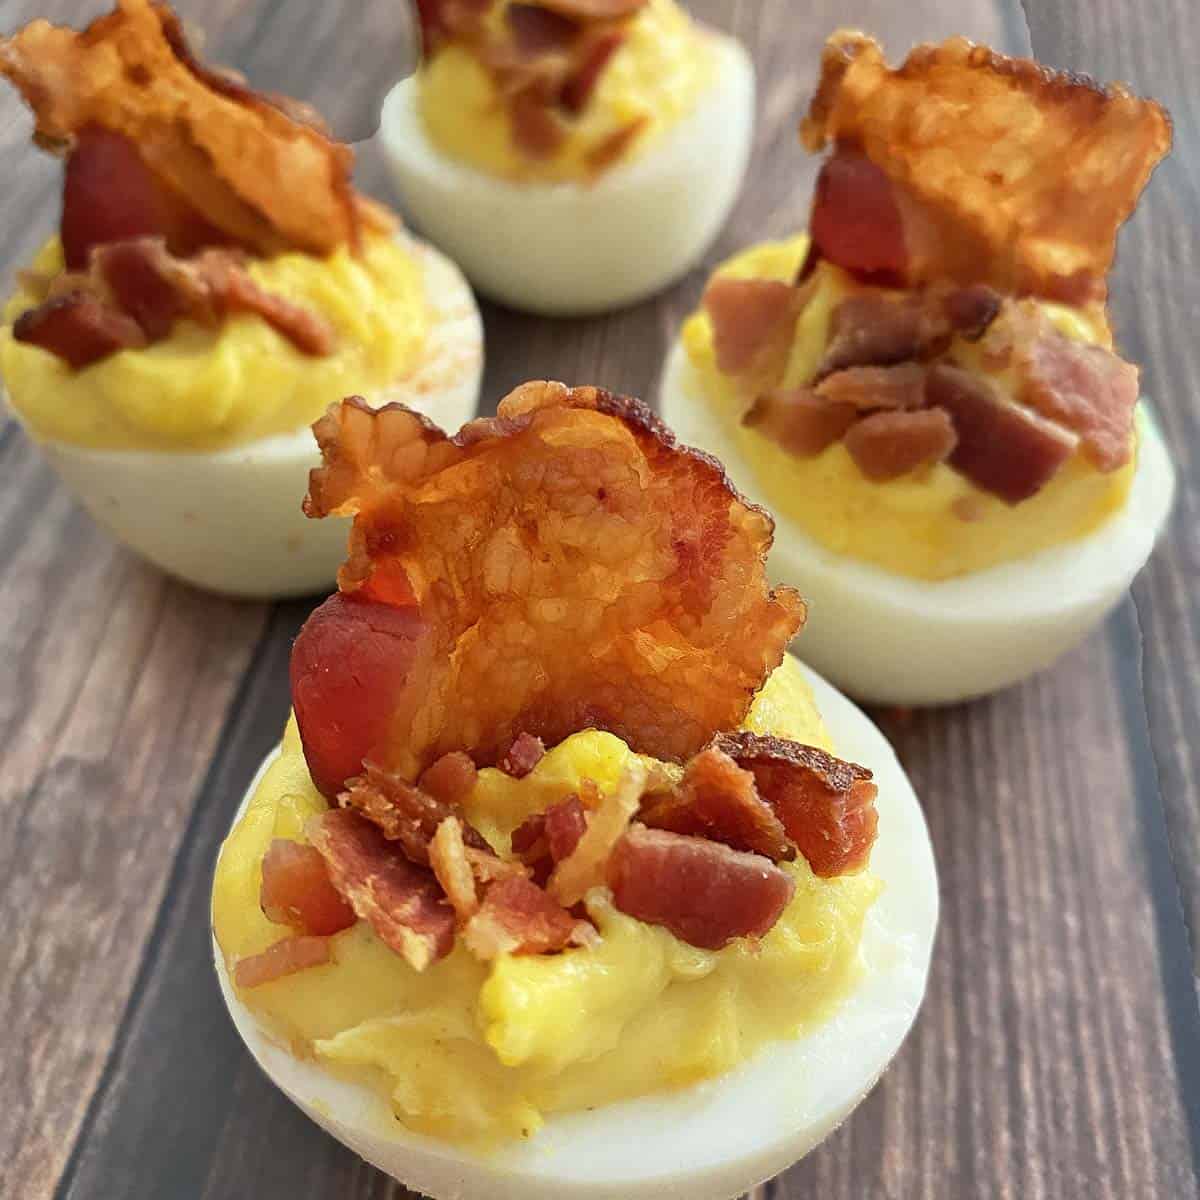 https://bensabaconlovers.com/wp-content/uploads/2018/03/deviled-eggs-with-bacon-recipe.jpg